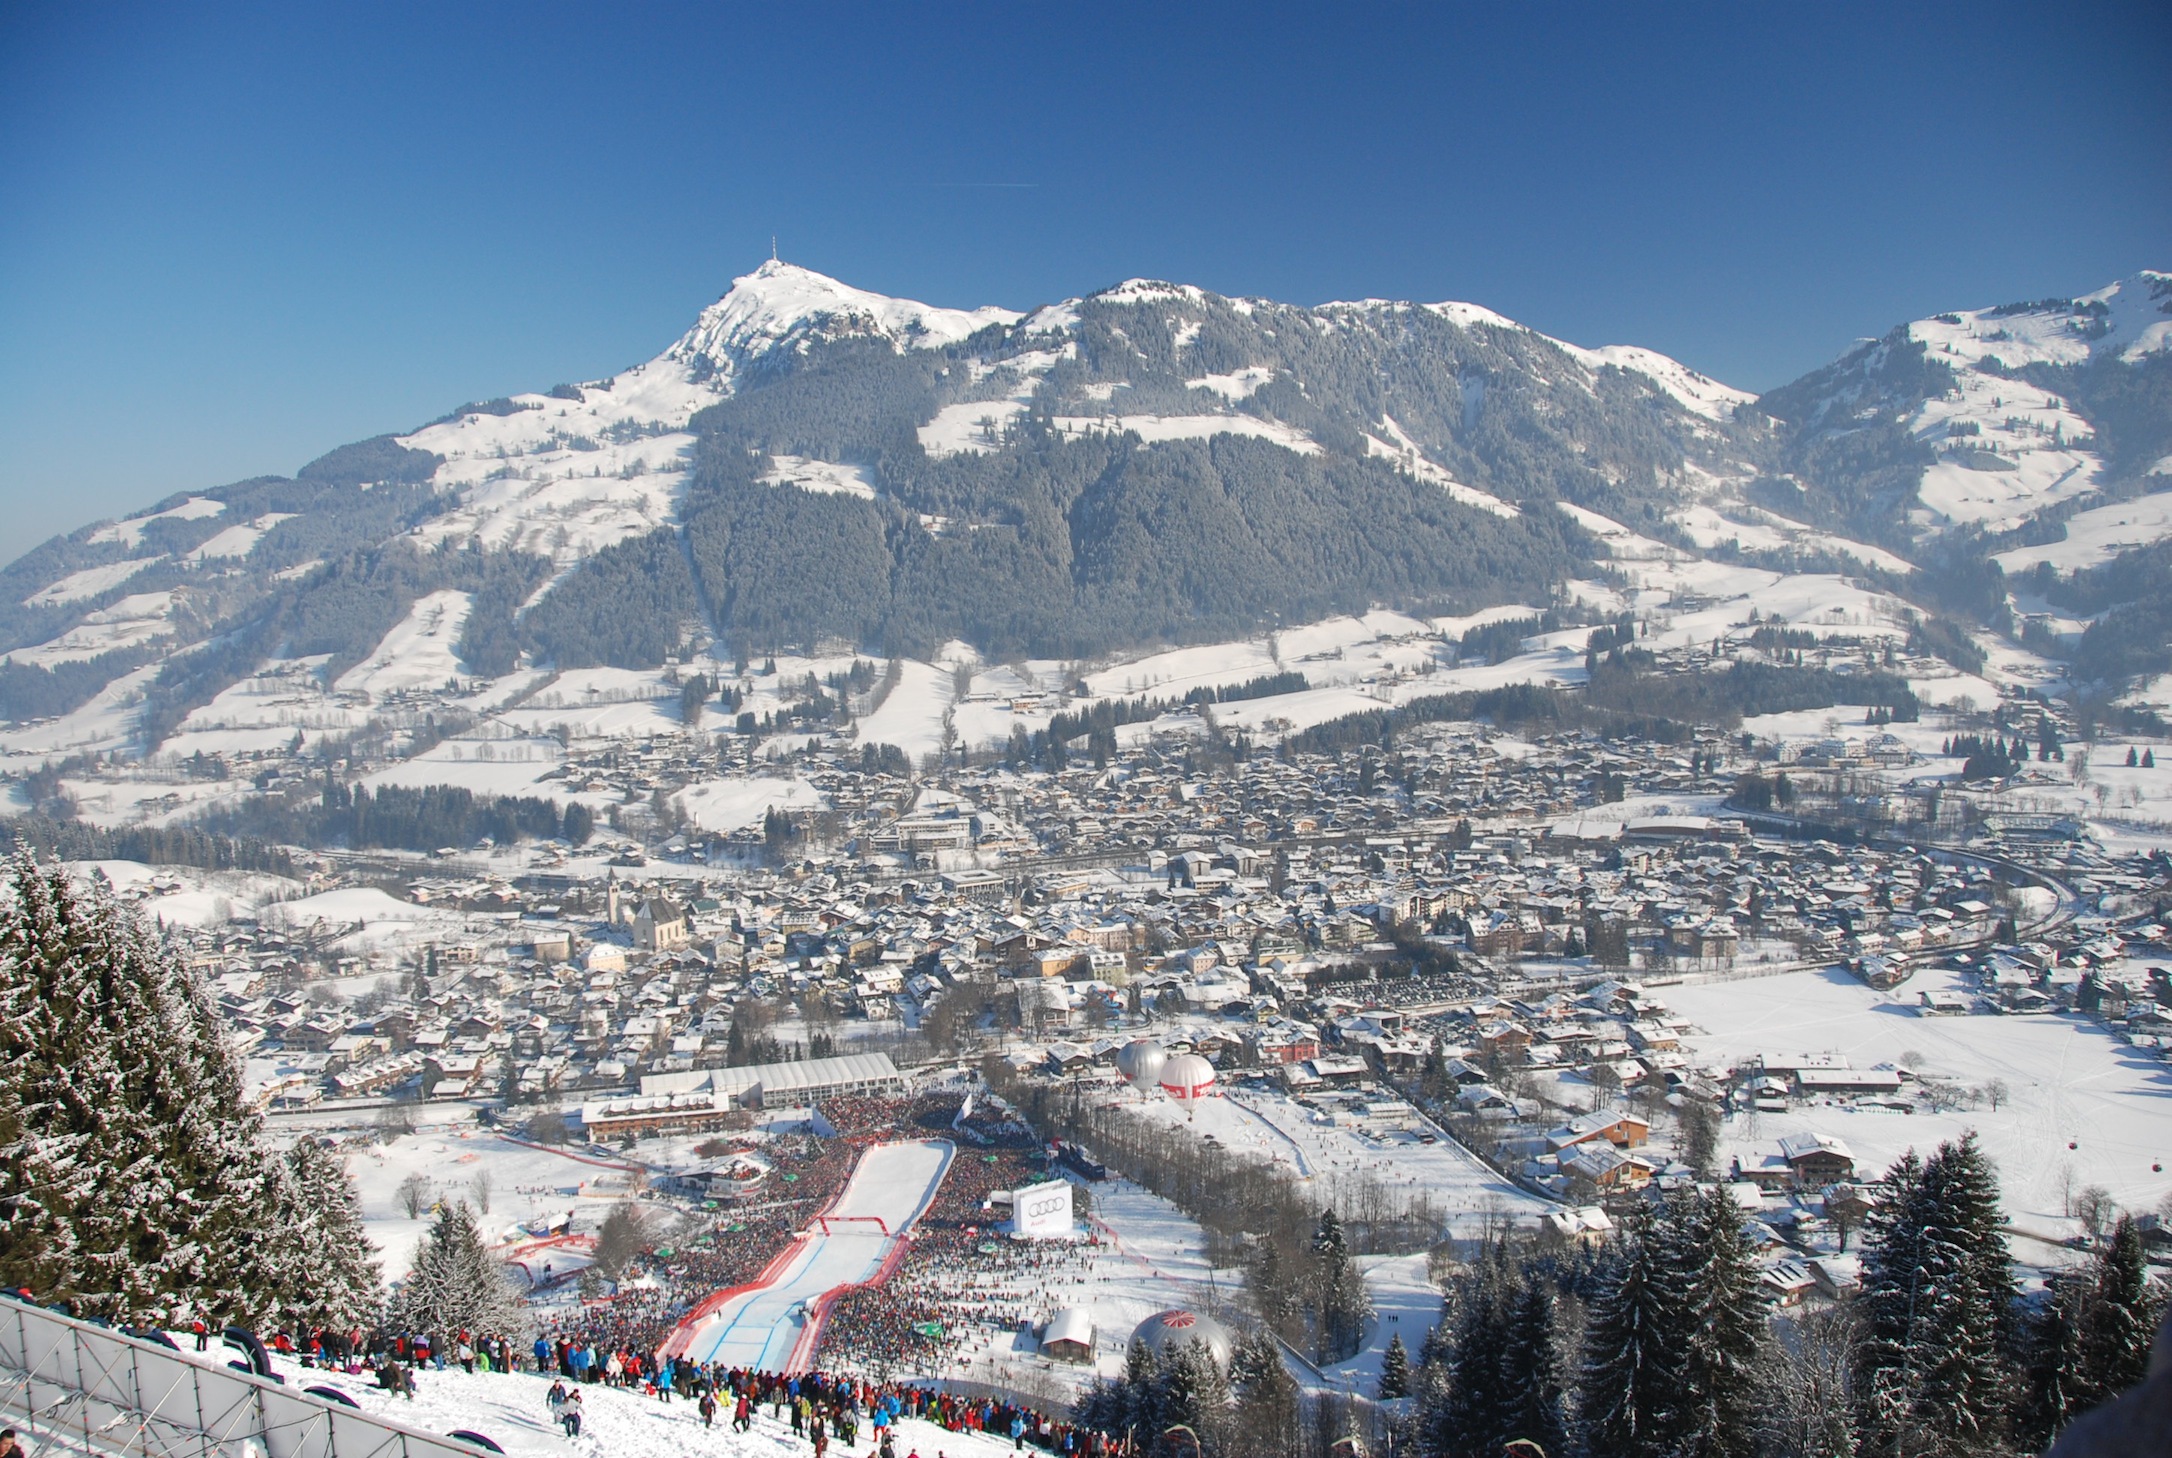 Ski resort of Kitzbuehel Austria wallpapers and images   wallpapers